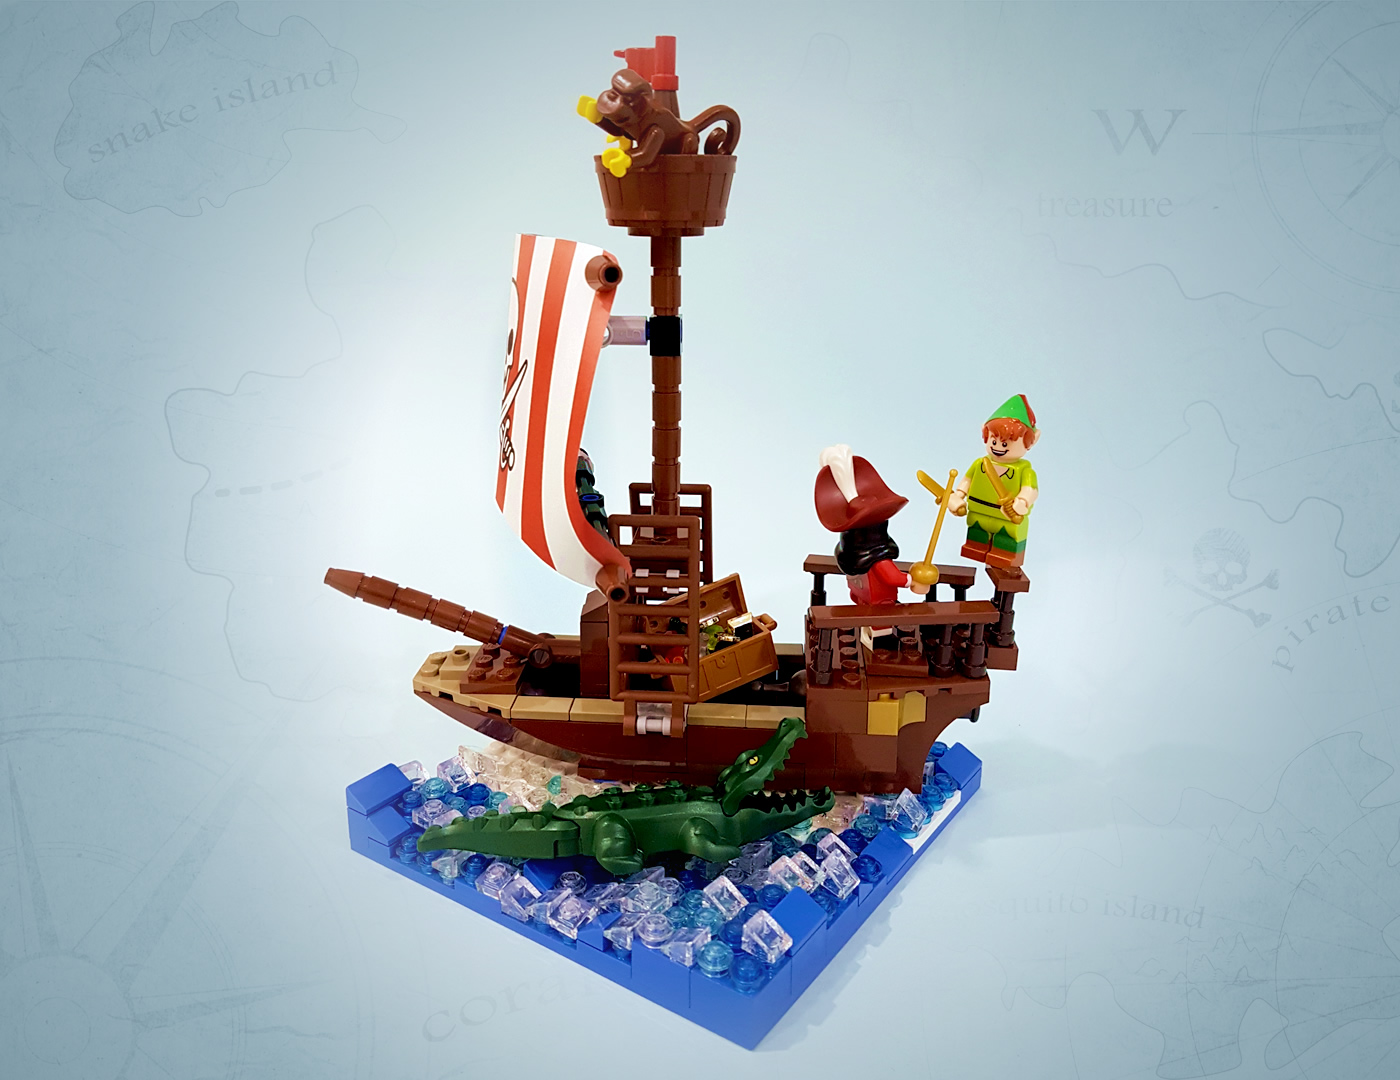 https://www.classic-pirates.com/wordpress/images/2022/05/lego-pirate-ship-peter-pancaptain-hook-featured-angela-chung.jpg